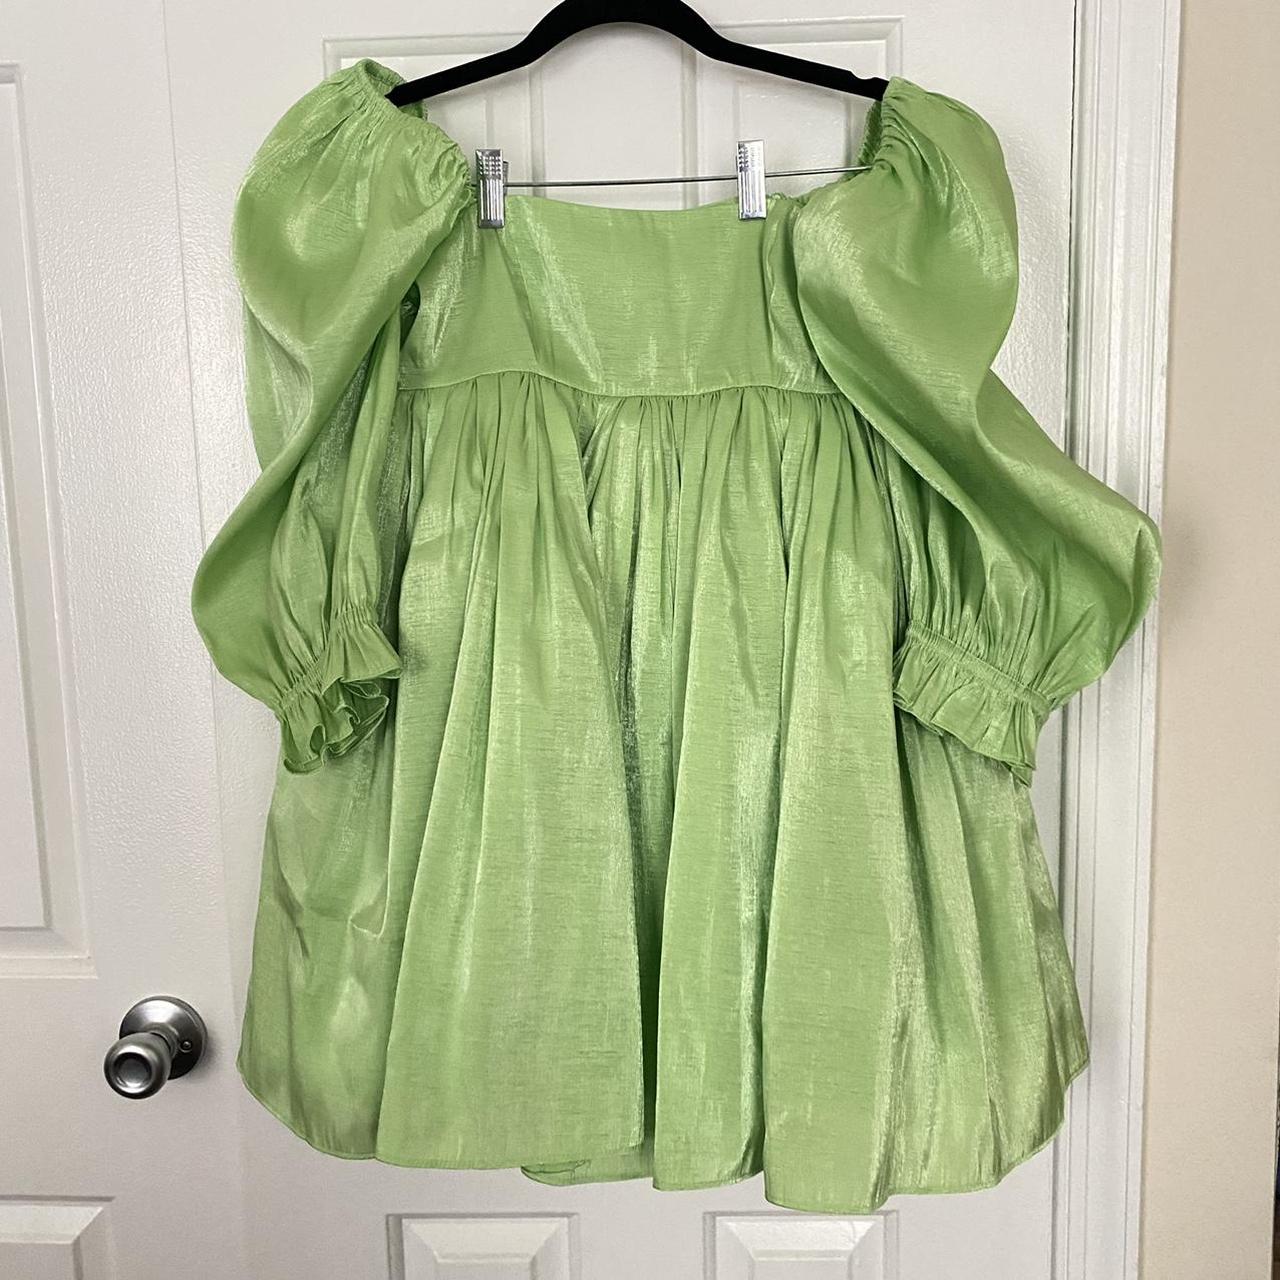 Selkie Avocado Green Puff Dress. Recycled organza,... - Depop